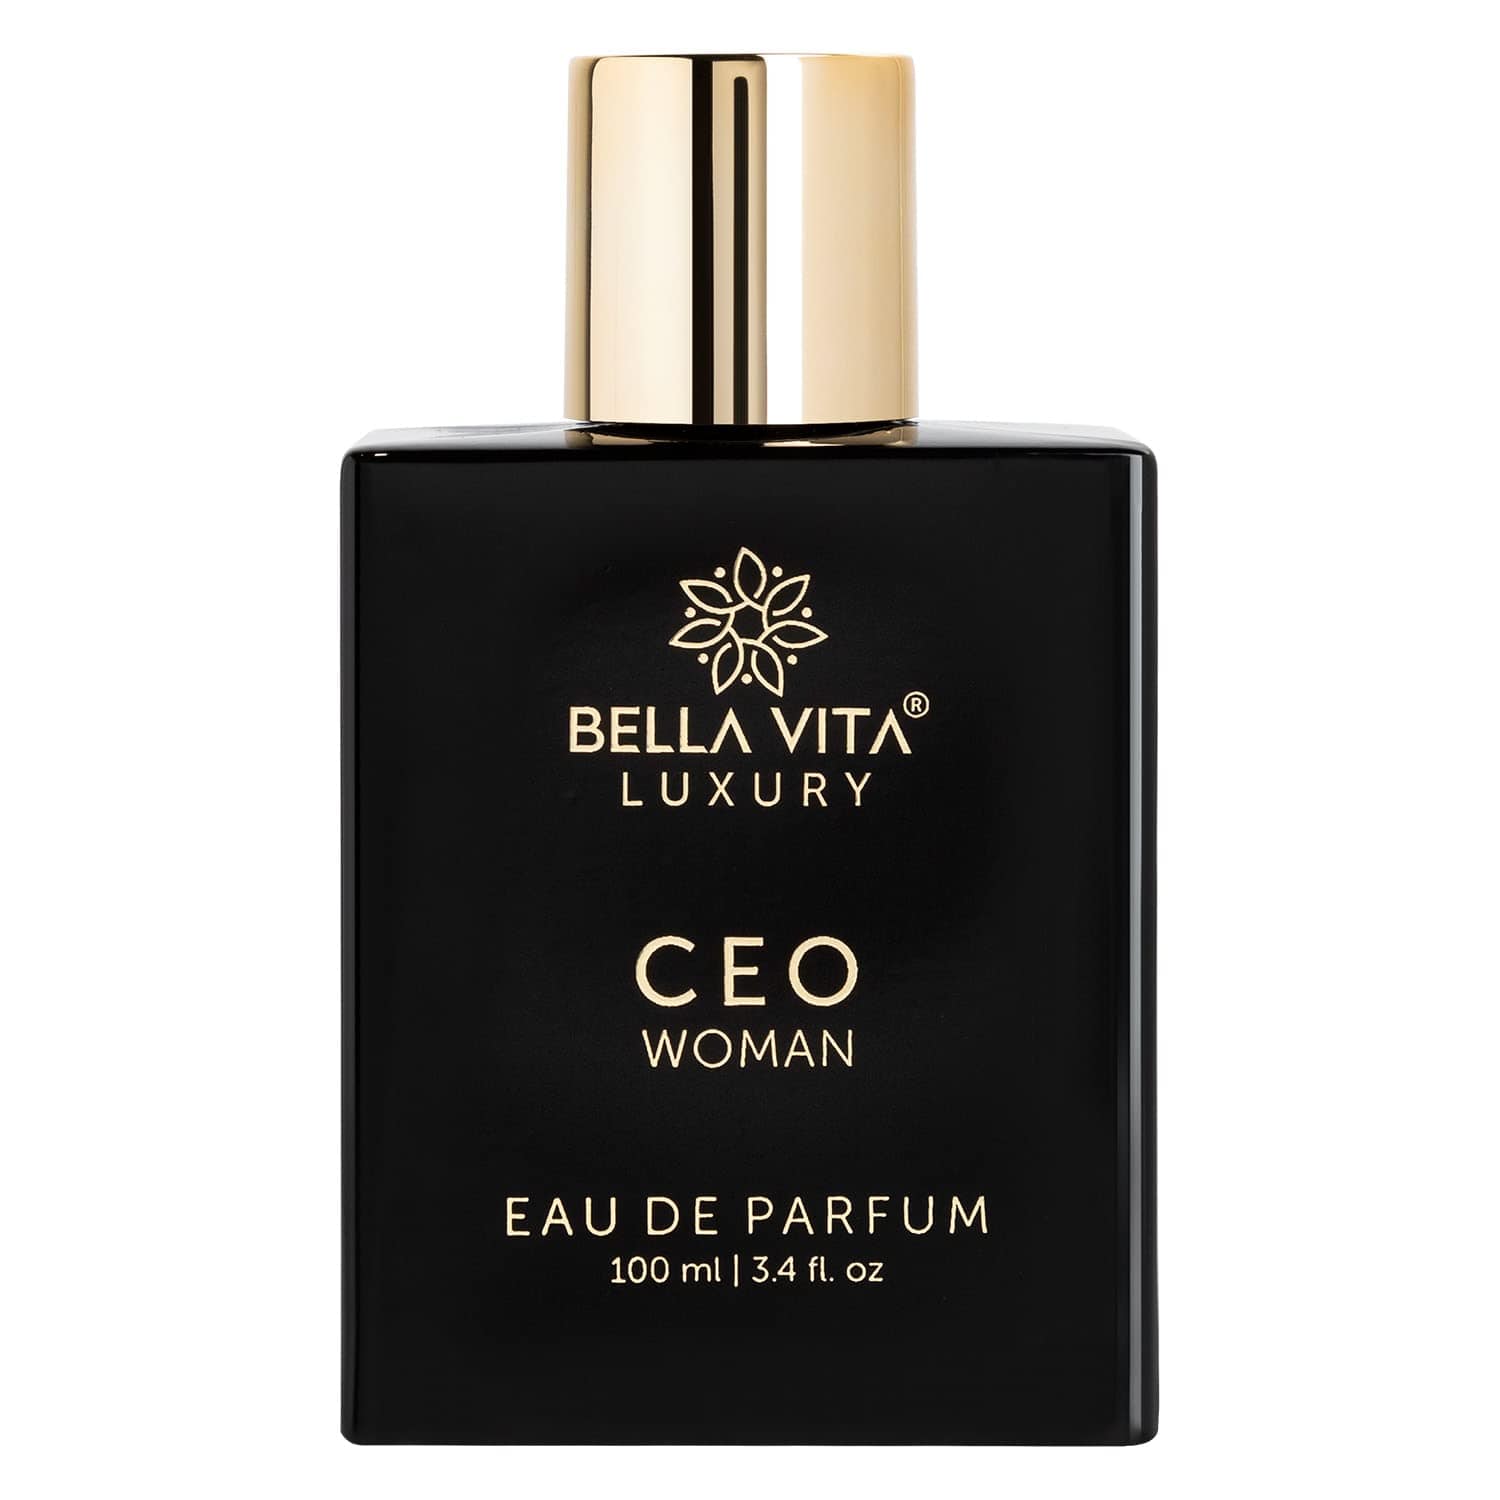 Bella Vita Luxury CEO Woman Eau De Parfum Perfume with Ylang Ylang, Vanilla, Musk, Tonka & Plum|Spicy Long Lasting EDP Liquid Fragrance Scent for Women 100ml - YuvaFlowers